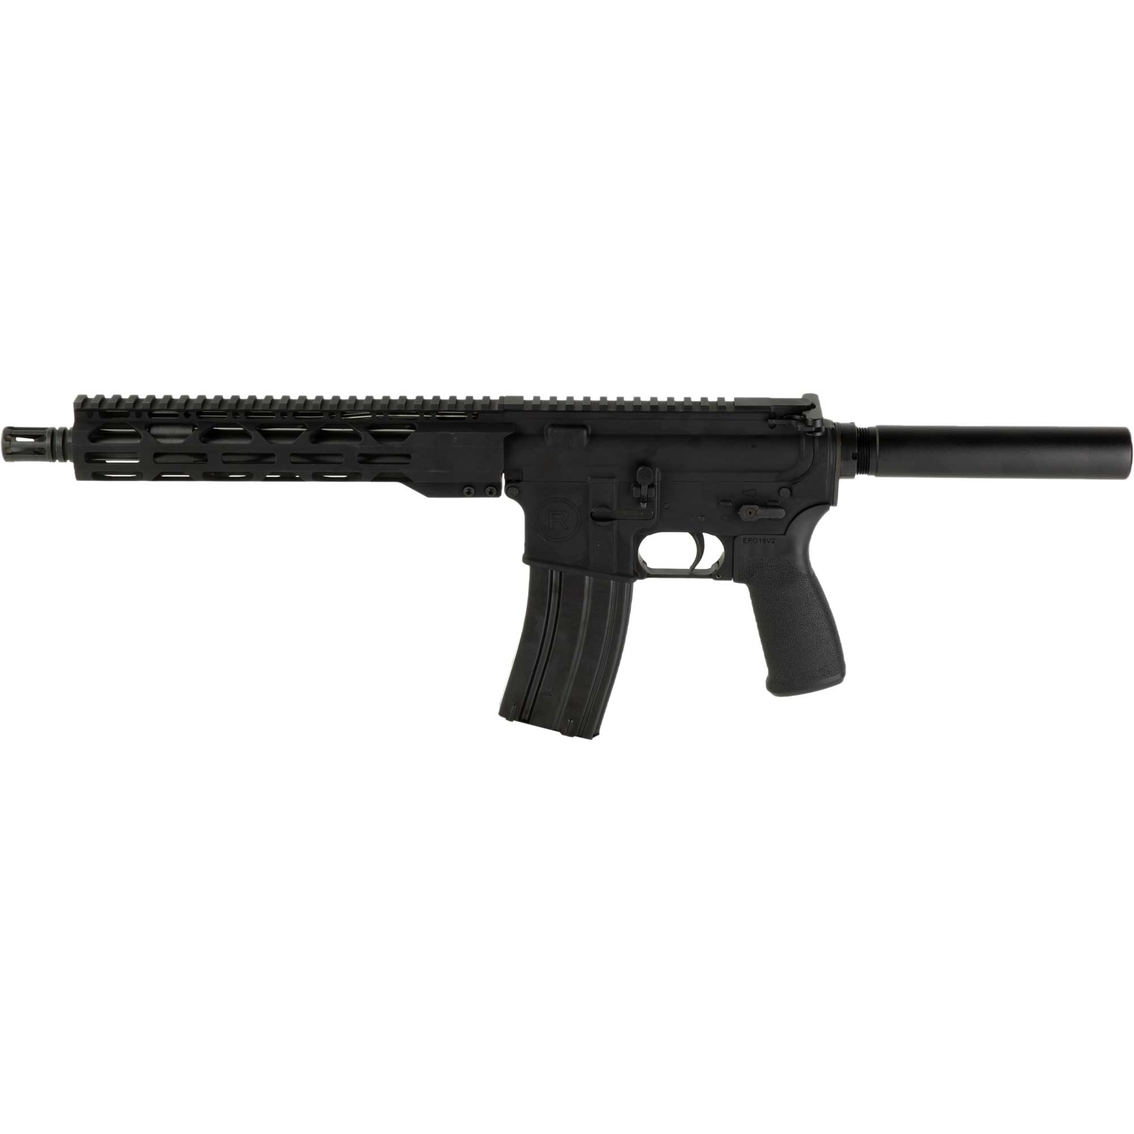 Radical Firearms RF Forged AR Pistol 556NATO 10.5 in. Barrel 30 Rds. Pistol, Black - Image 2 of 3